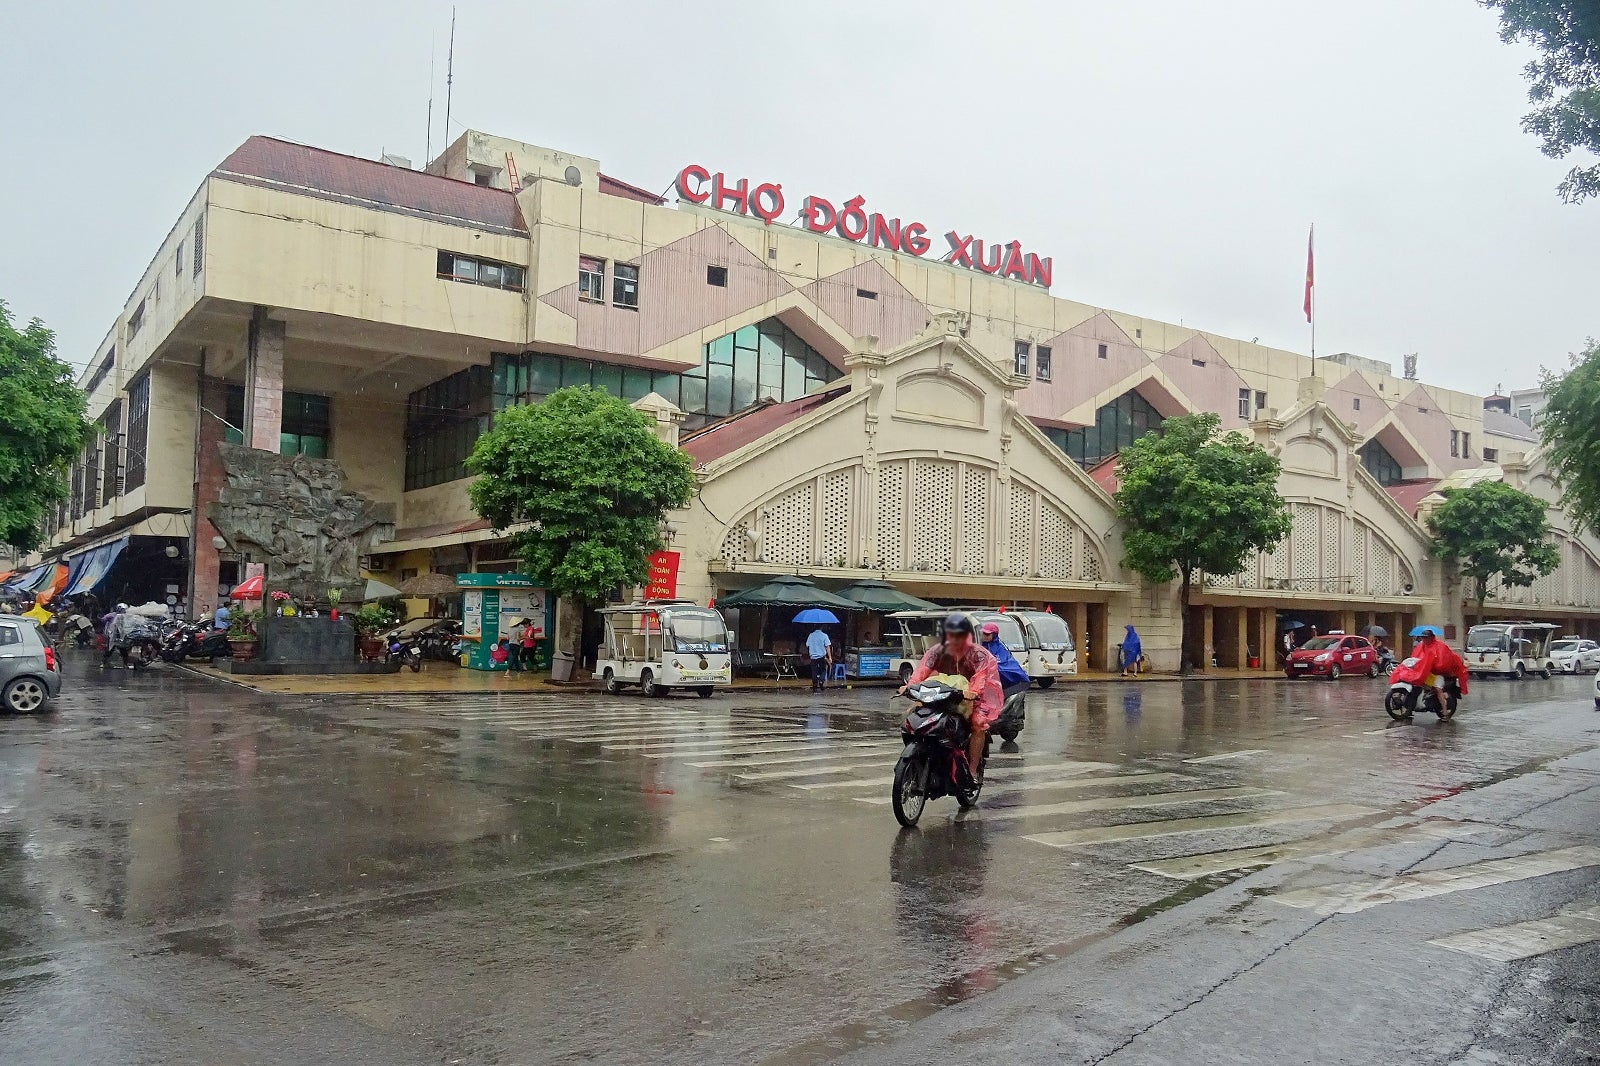  Best Local Markets in Hanoi: Dong Xuan Market